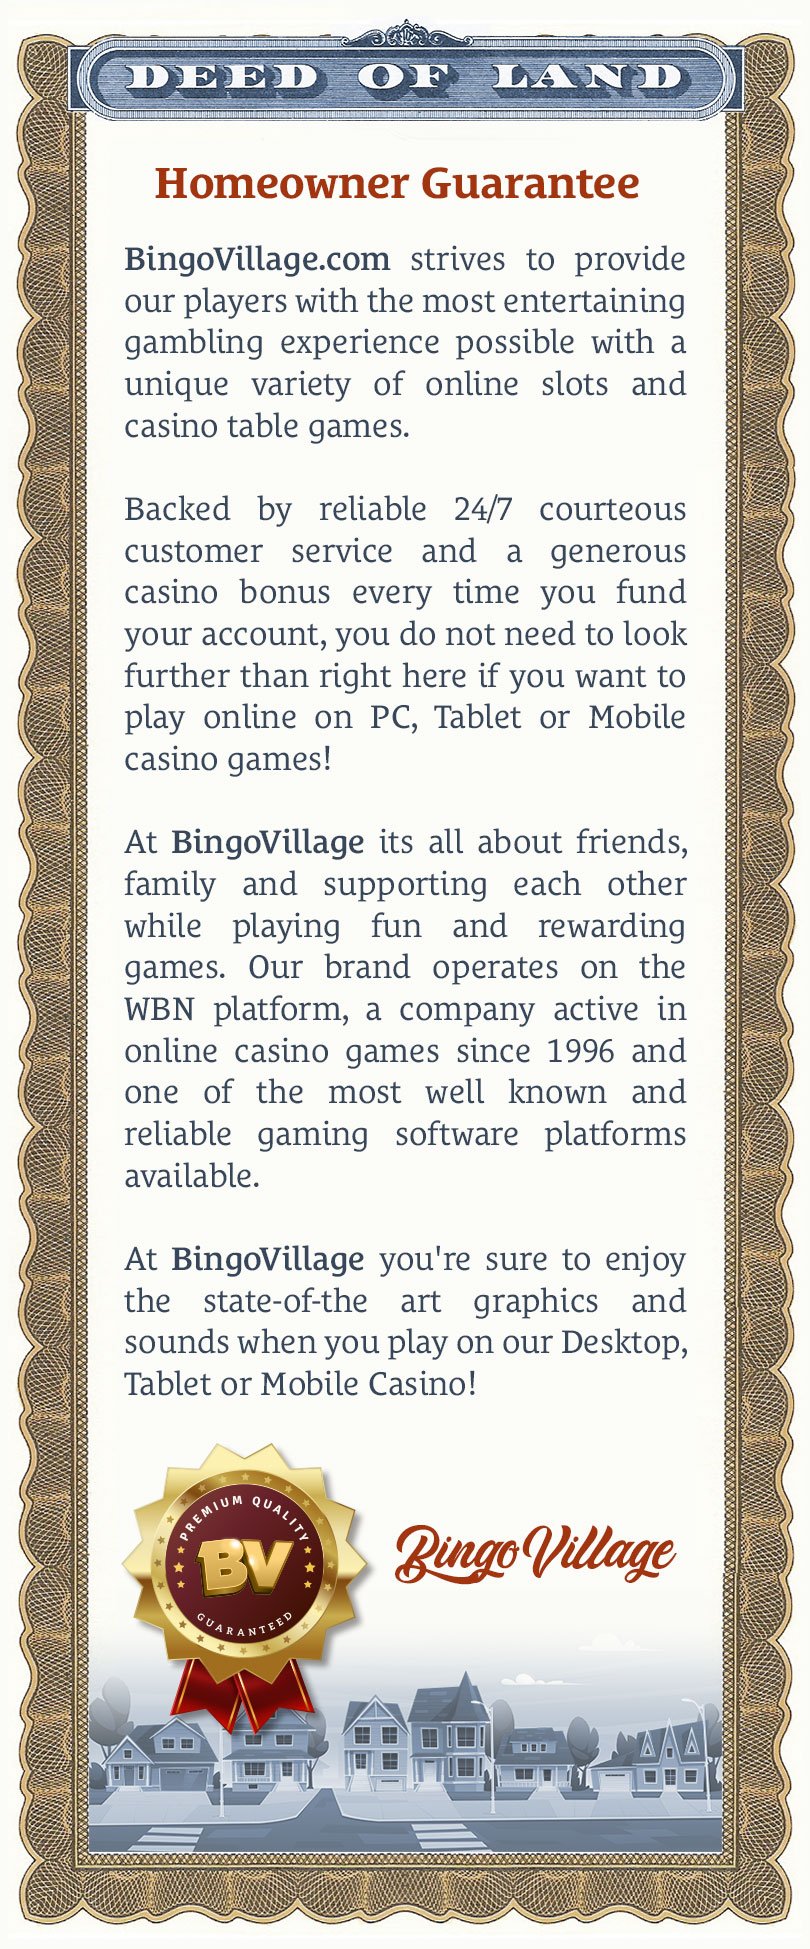 BingoVillage - Homeowner Guarantee